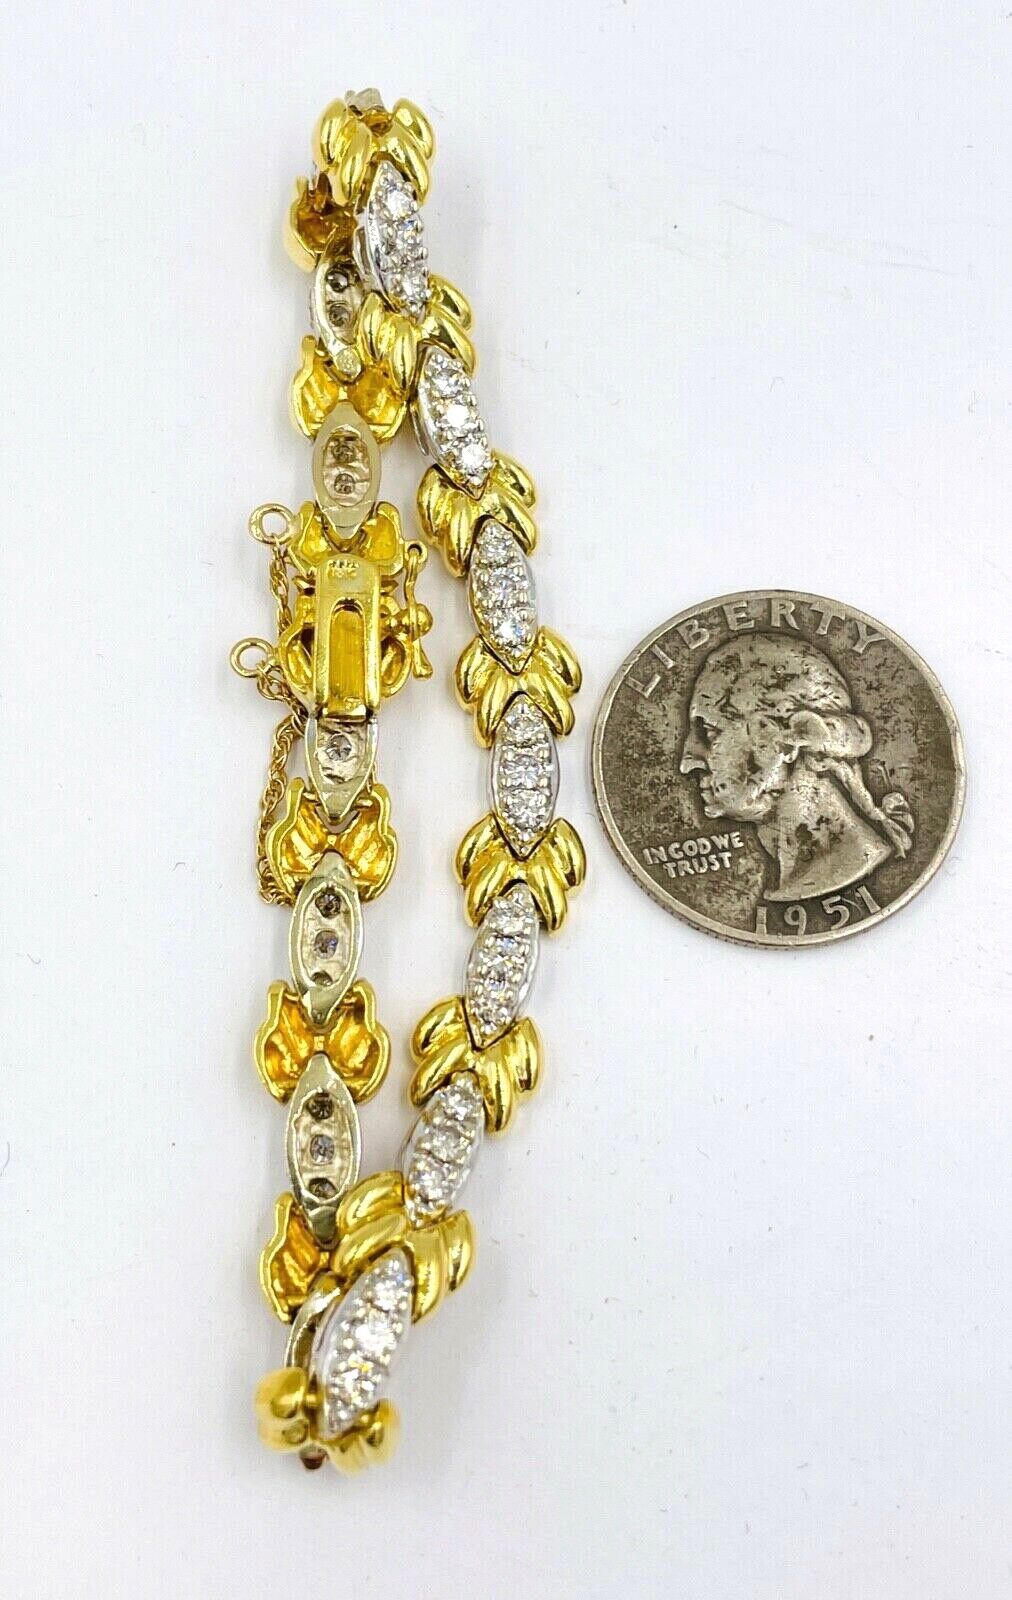 Estate 18k yellow and white Gold 2.80cts Diamond Bracelet VS K